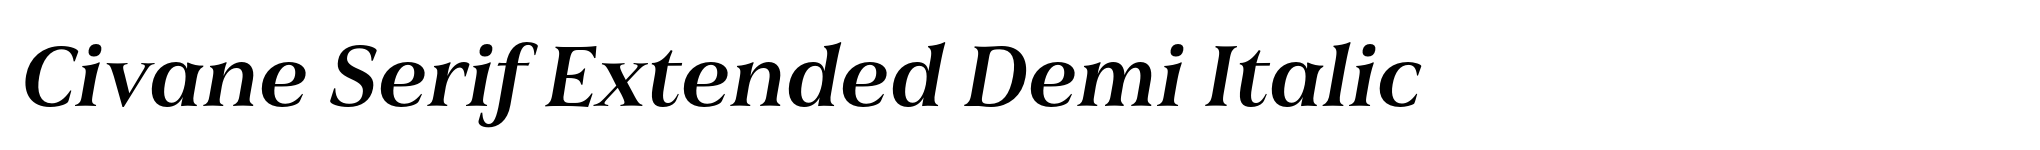 Civane Serif Extended Demi Italic image